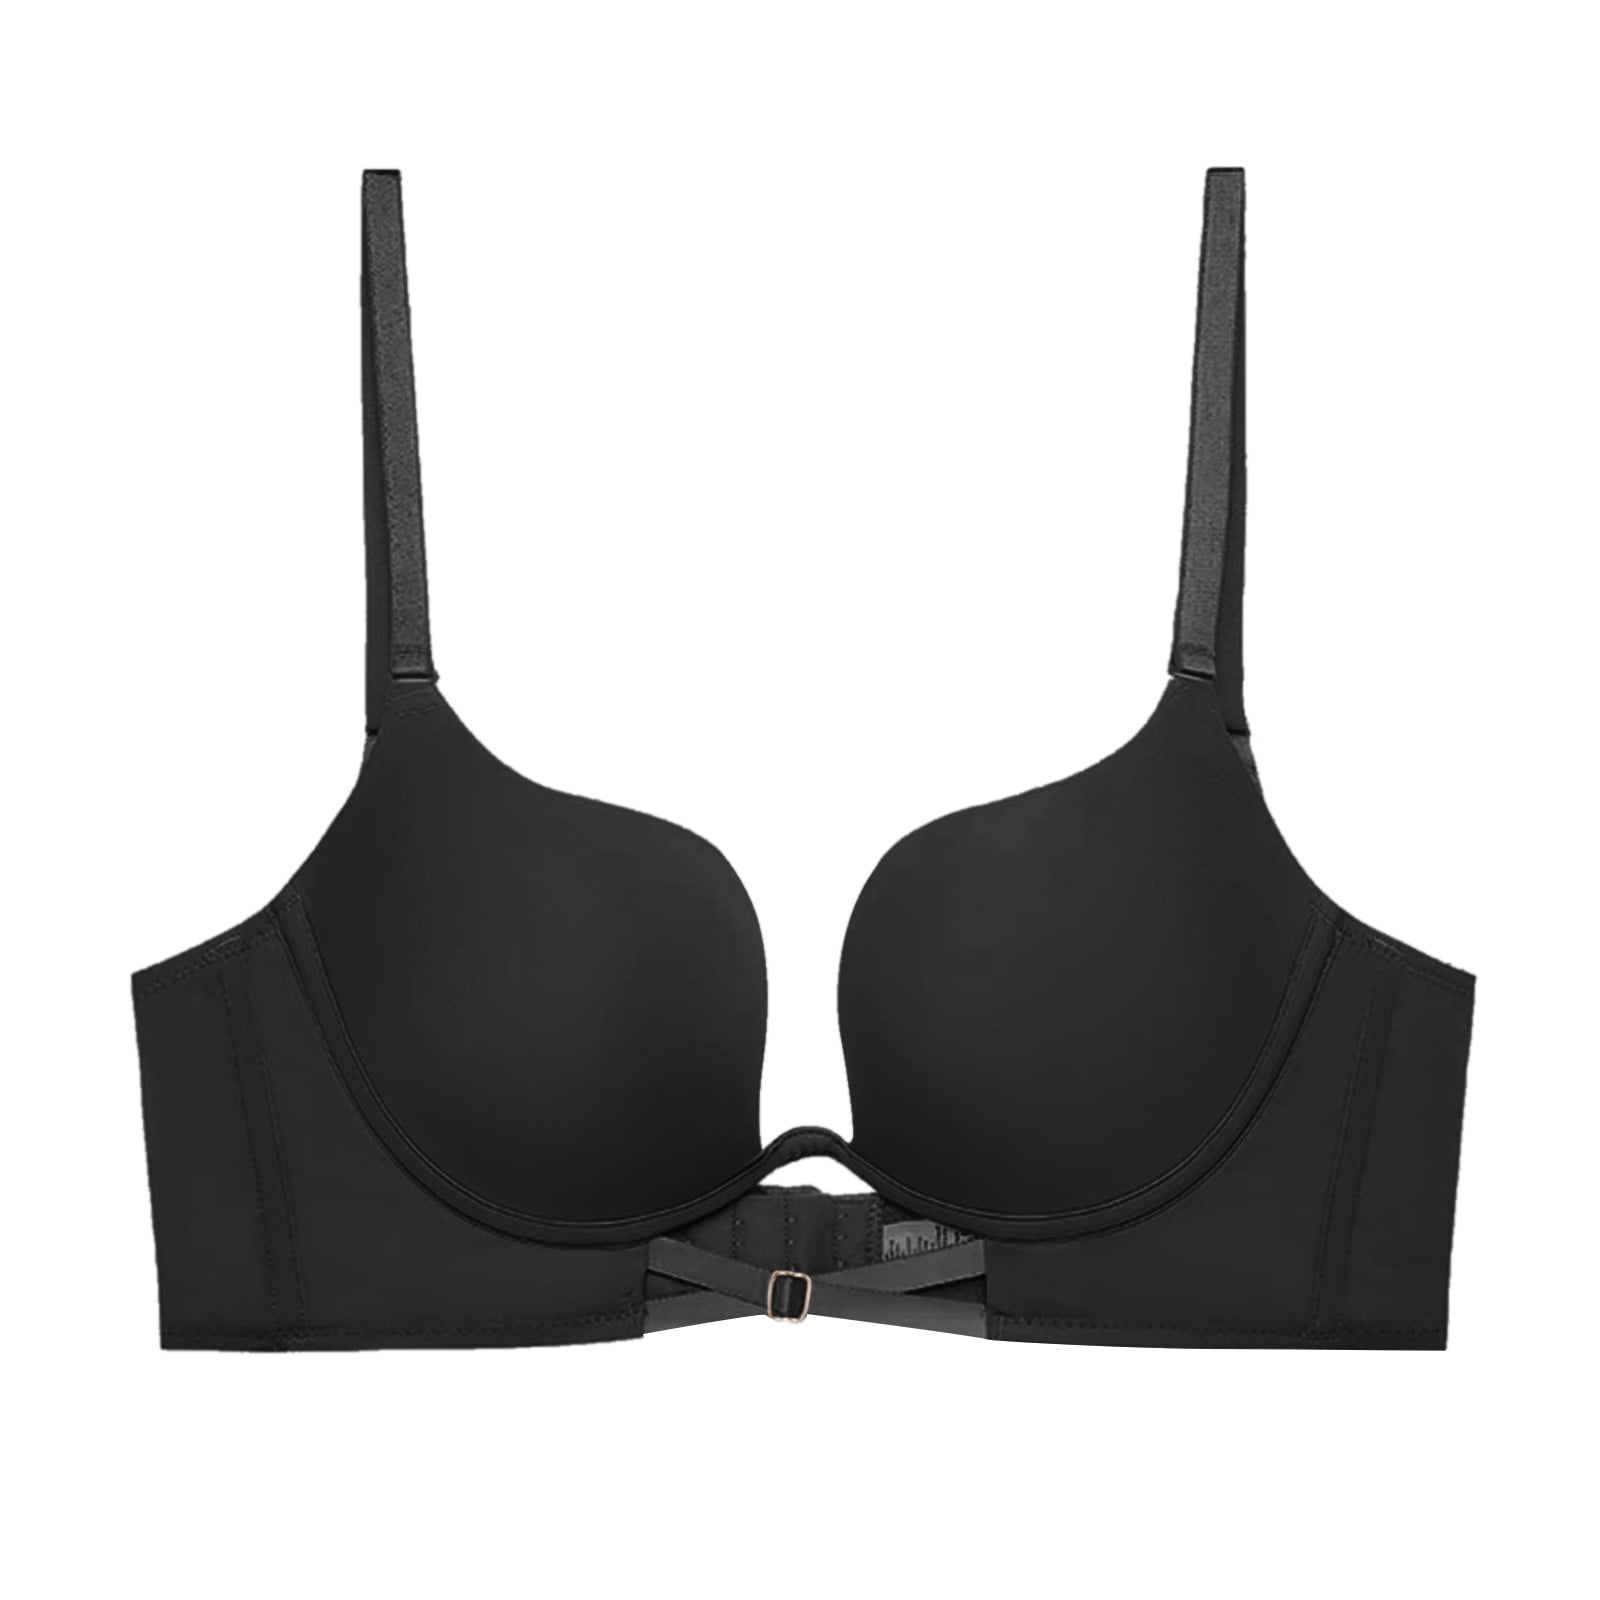 warners black strapless bra/1000 - Gem